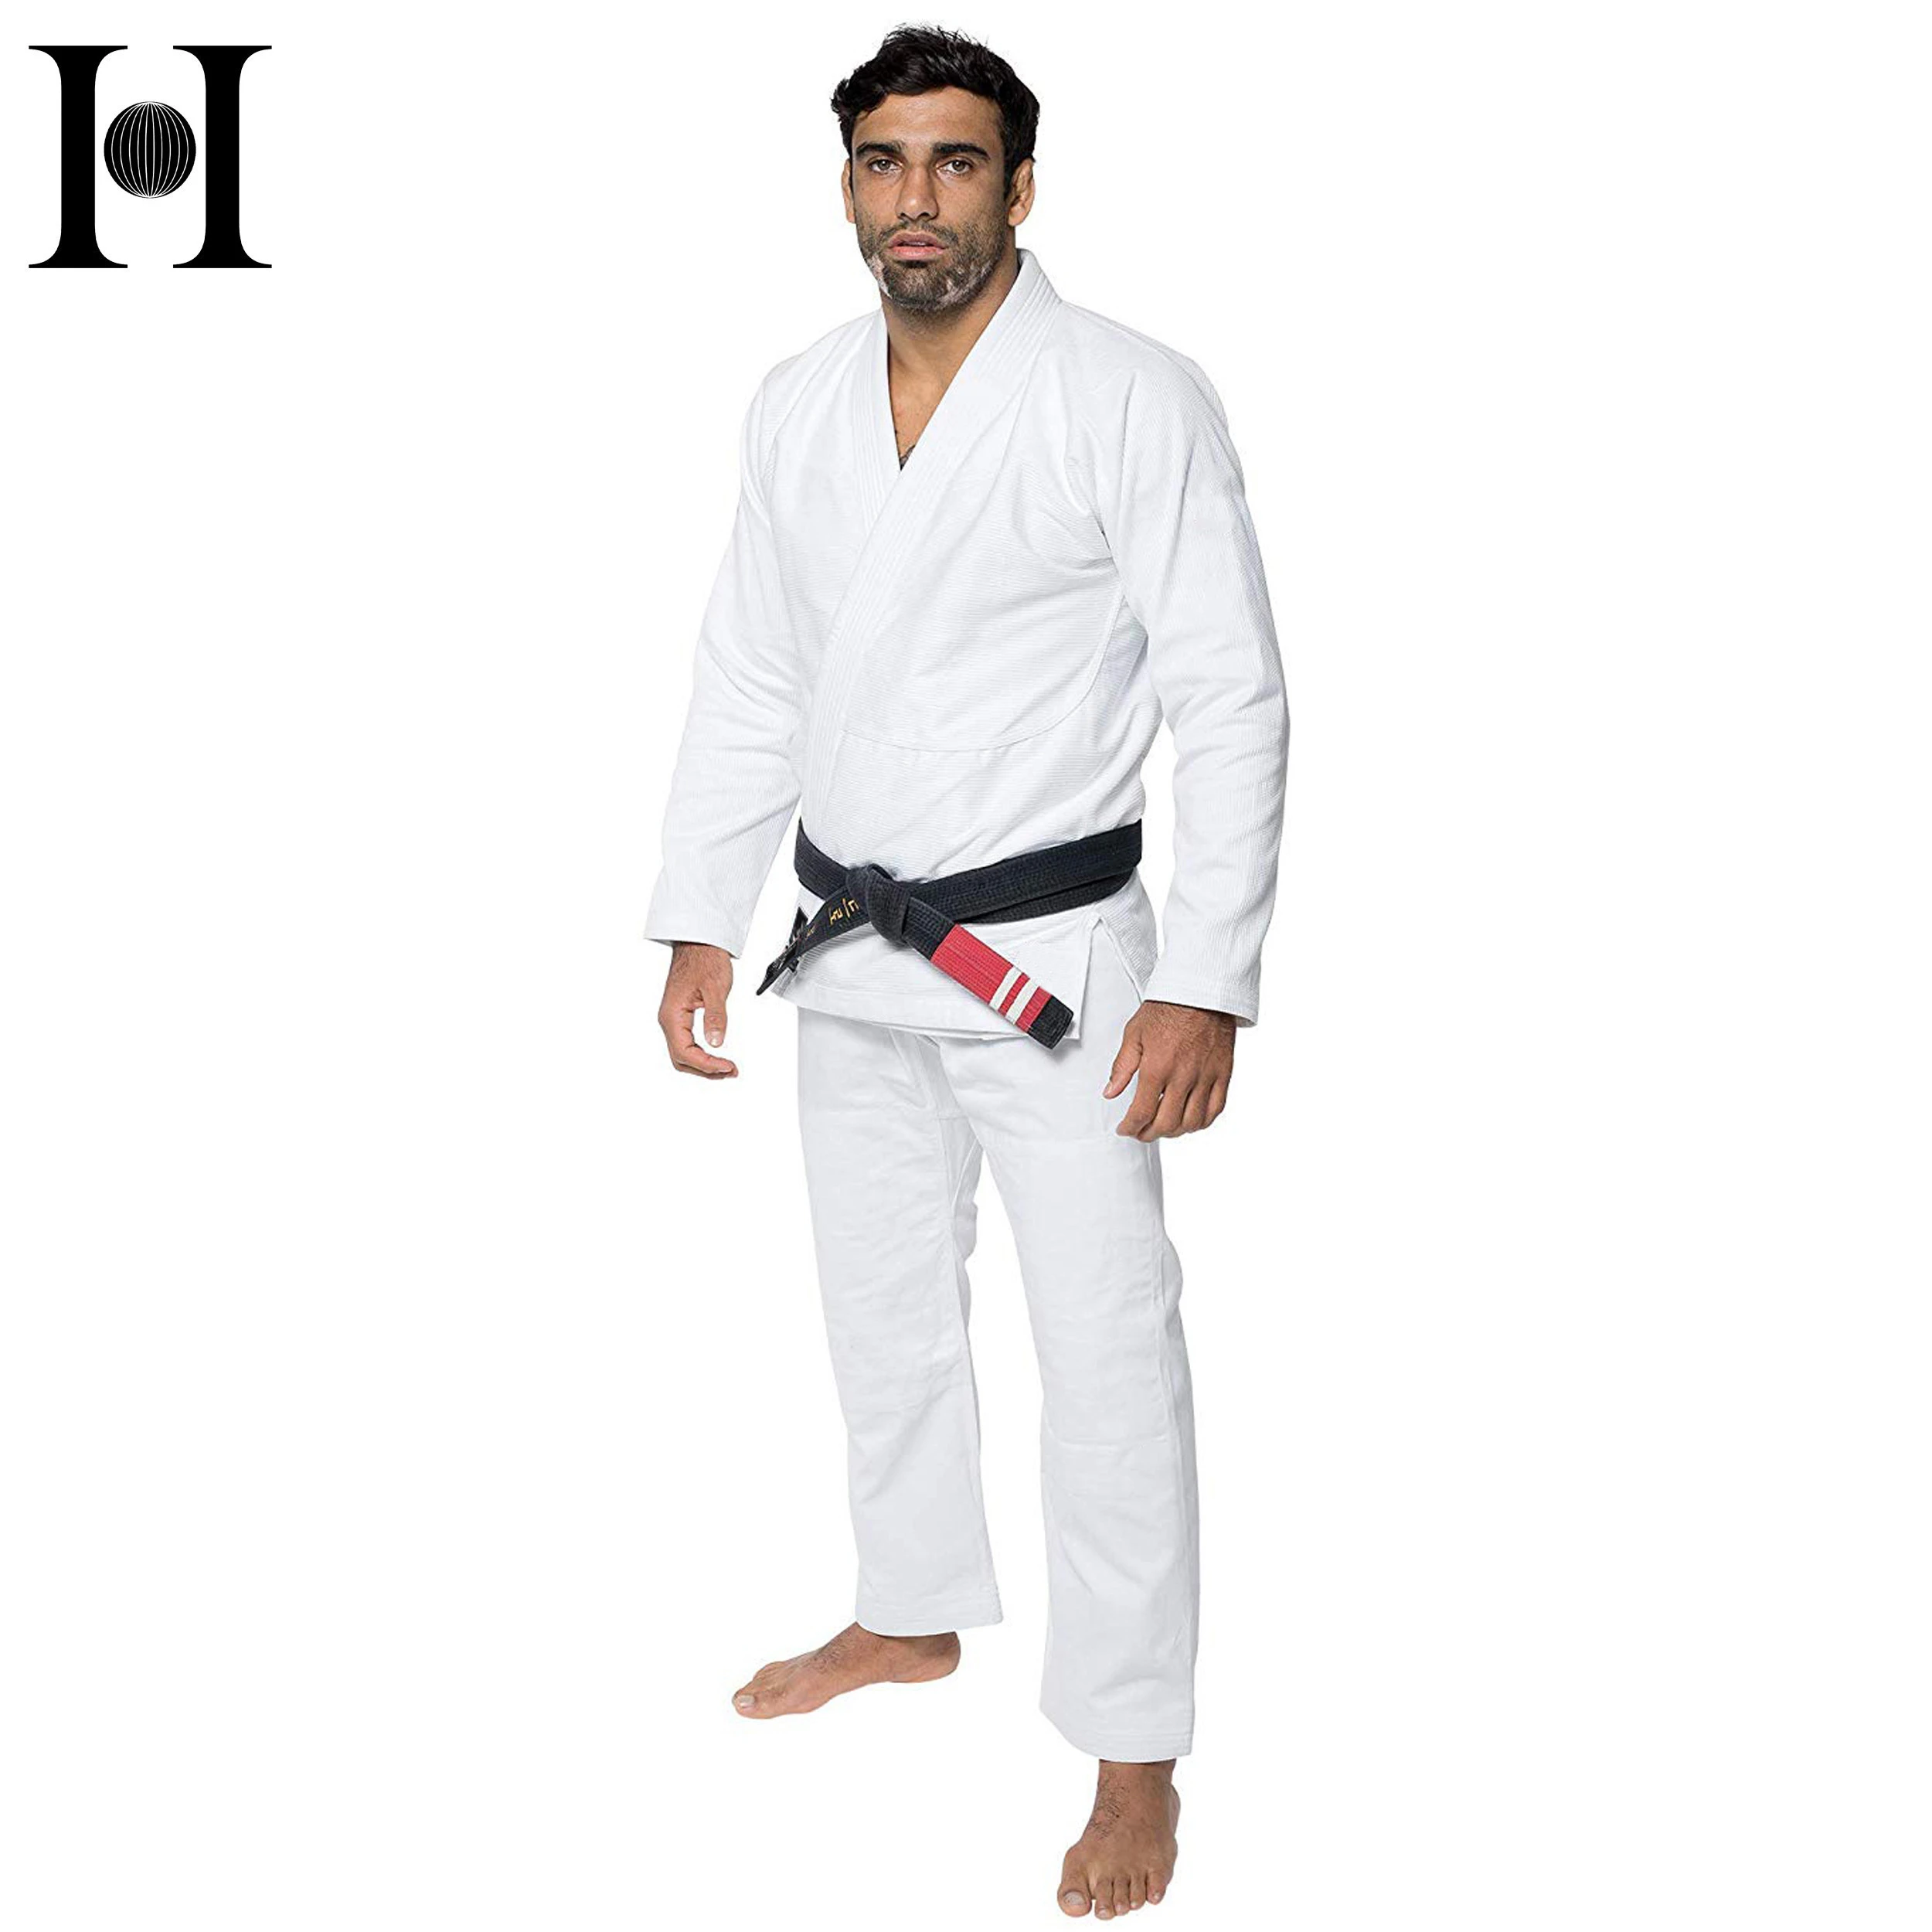 Premium Cotton  Brazilian Jiu Jitsu Gi Top Quality Karate Suit Fully Breathable Quick Dry Material Martial Arts Karate Suits.